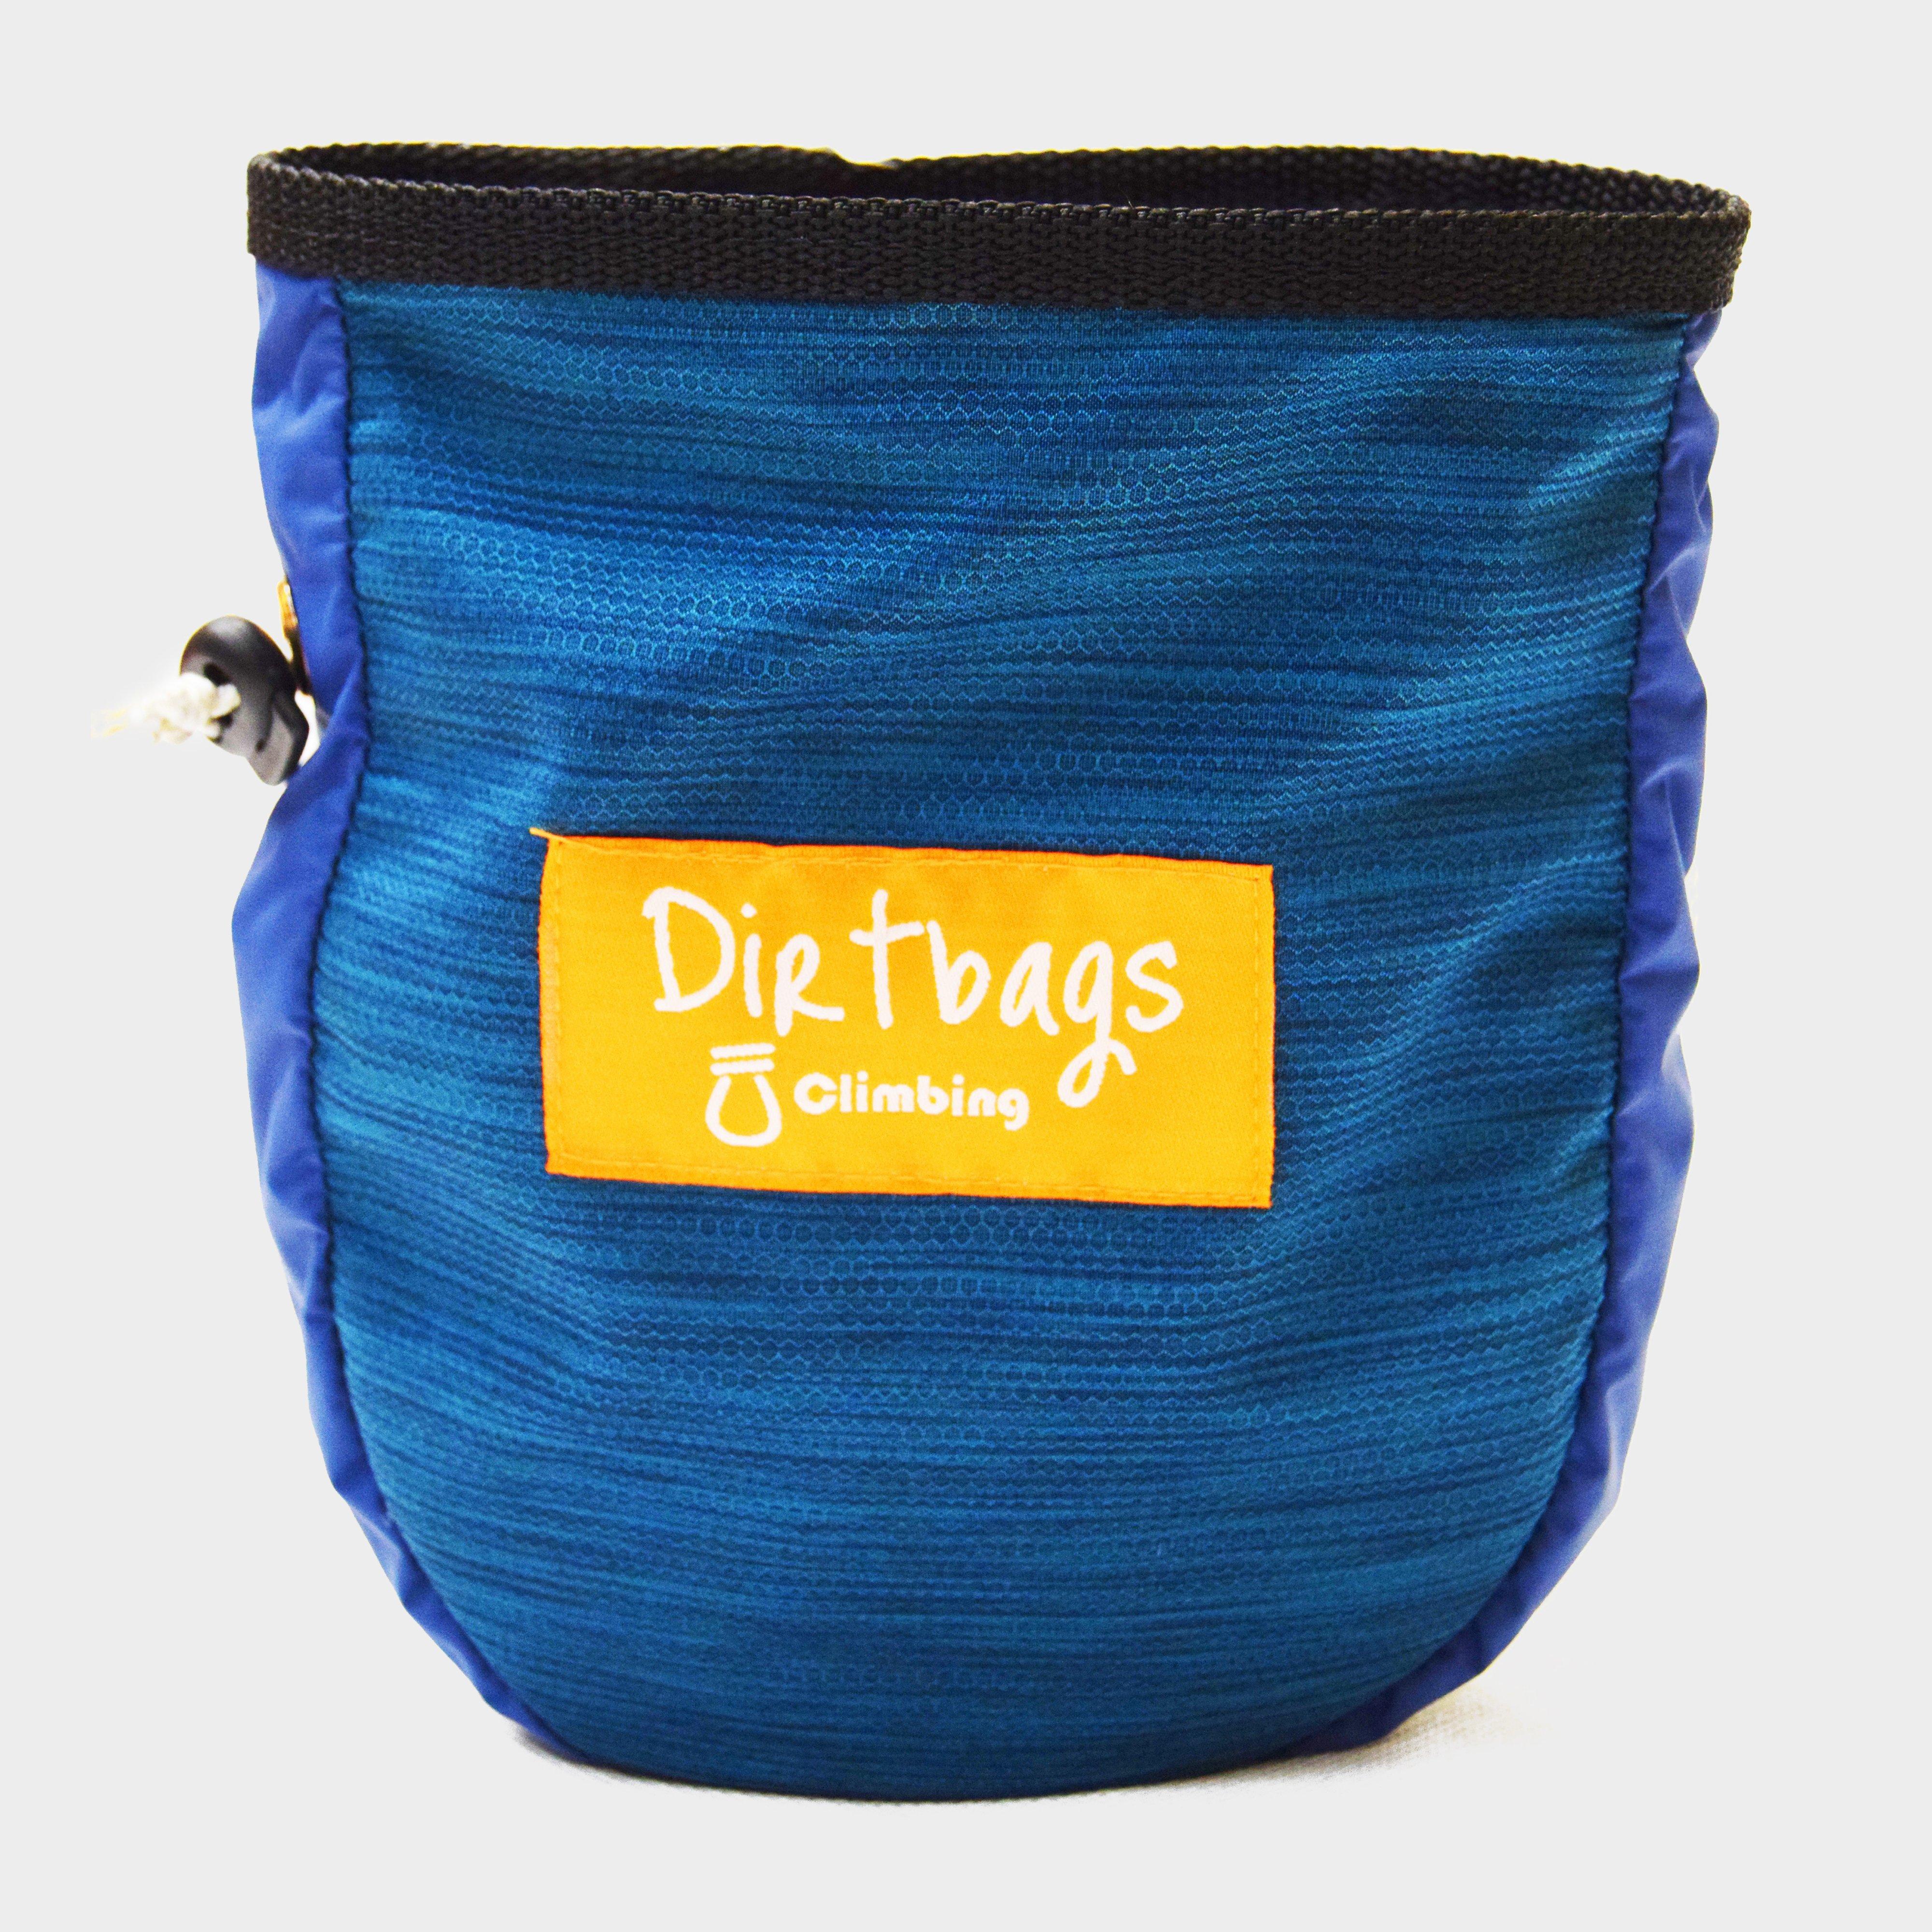 Dirtbags Climbing Fabric Chalk Bag - Multi/bag  Multi/bag